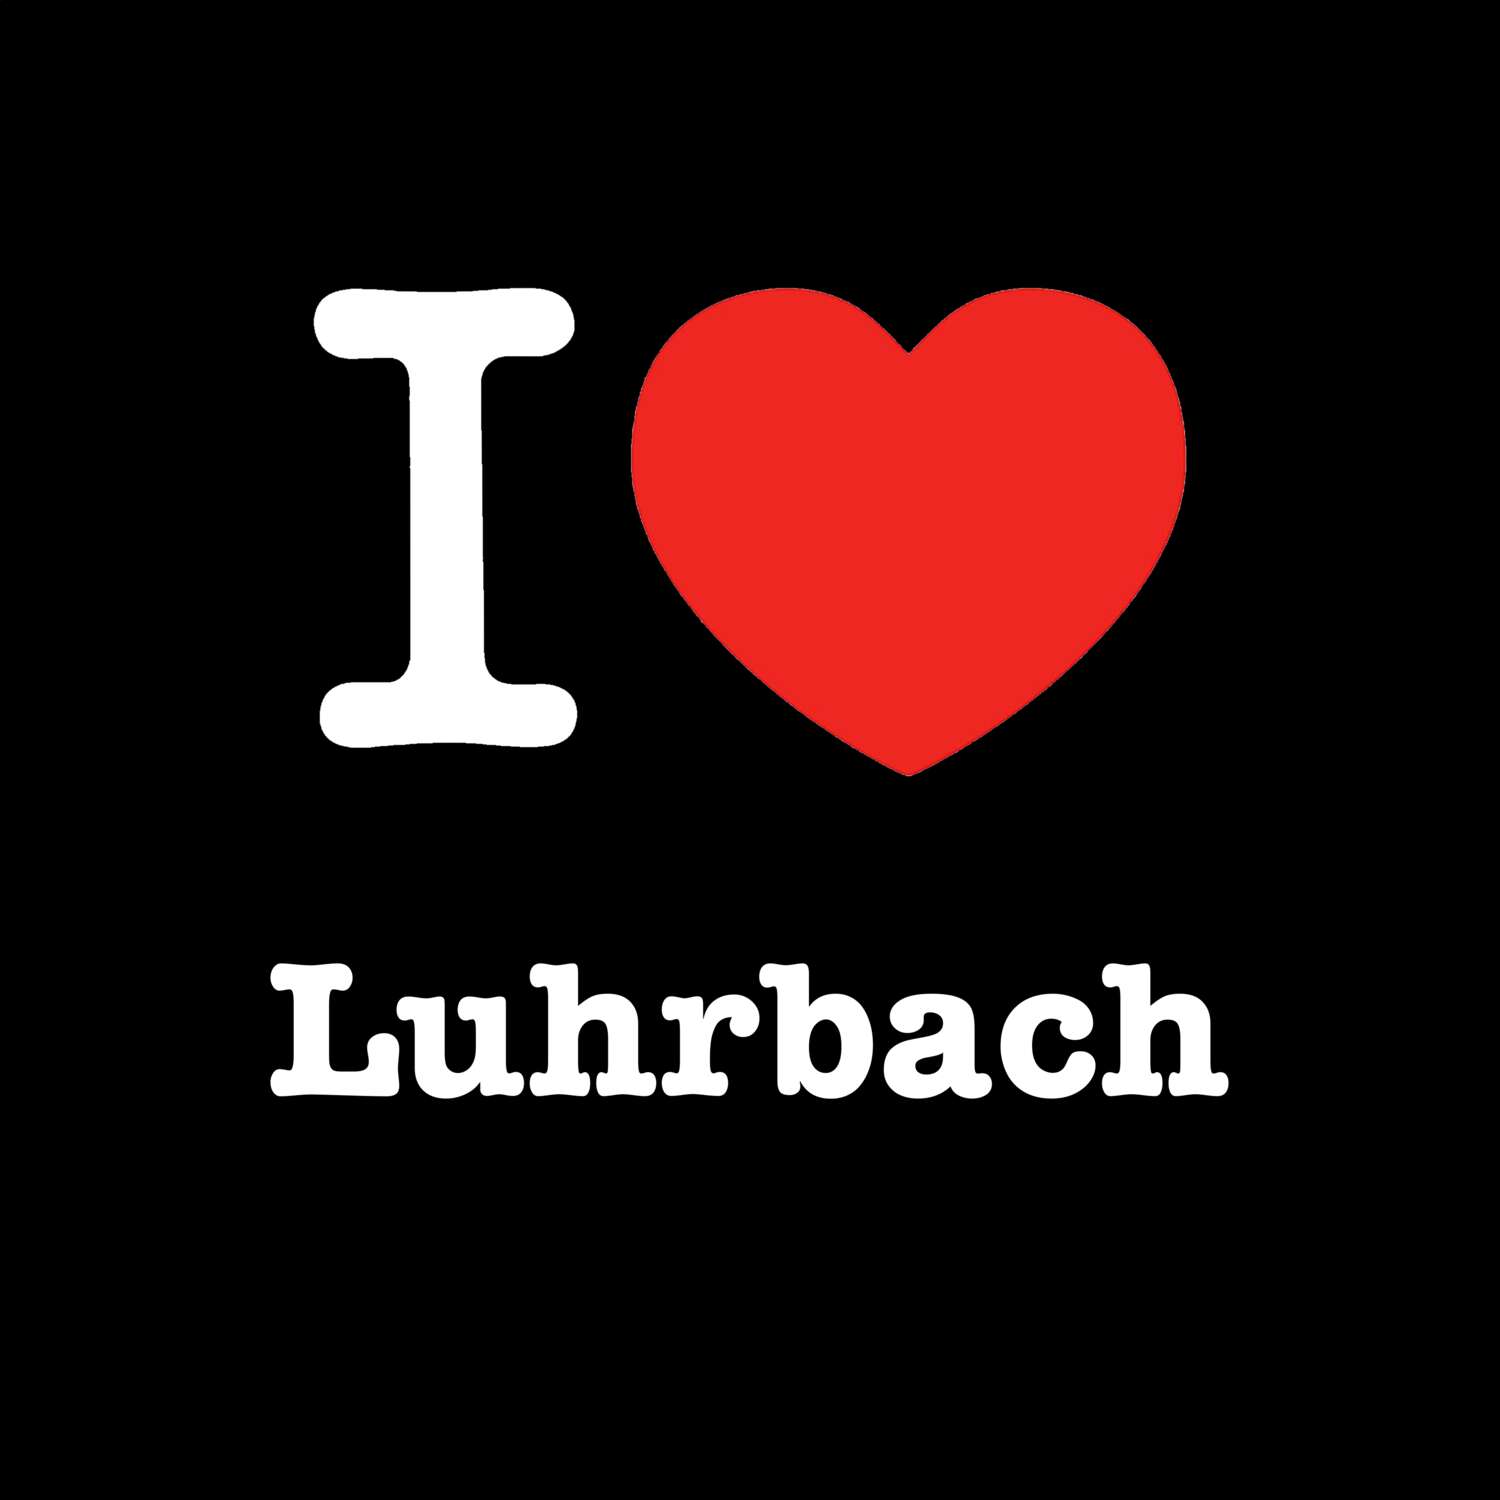 Luhrbach T-Shirt »I love«